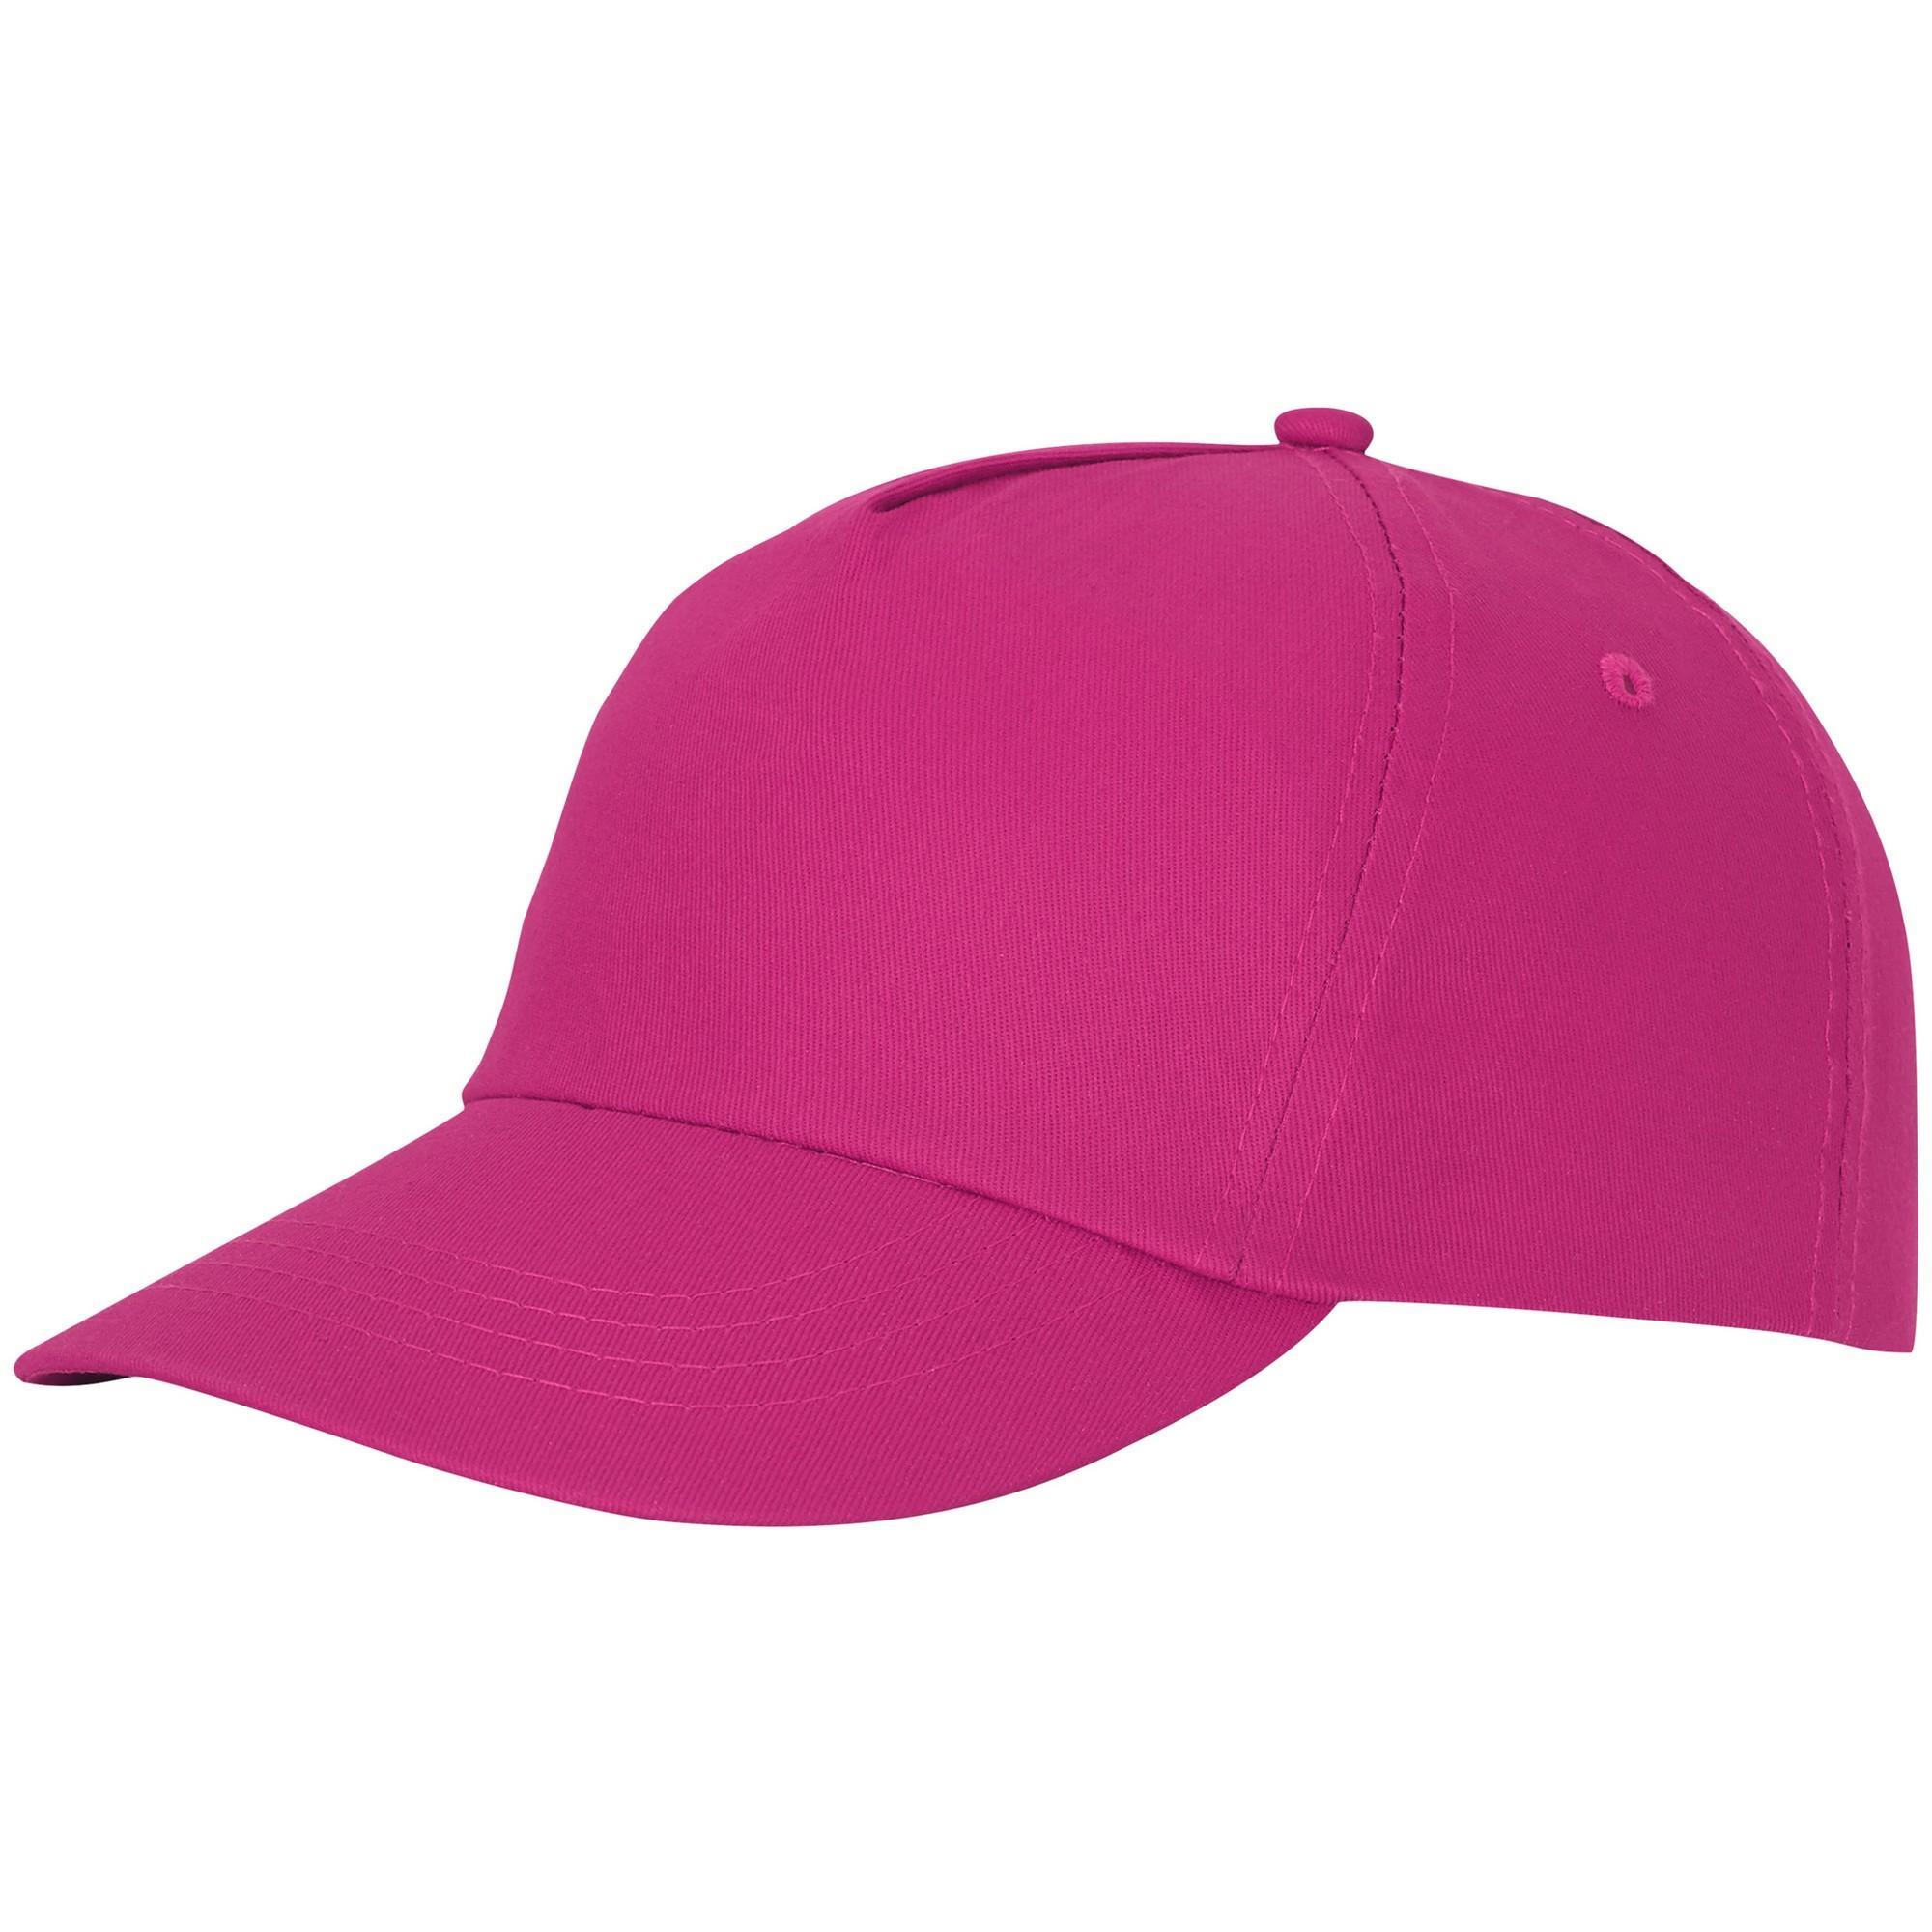 Bullet Feniks 5 Panel Baseball Cap (Pink) (One Size)